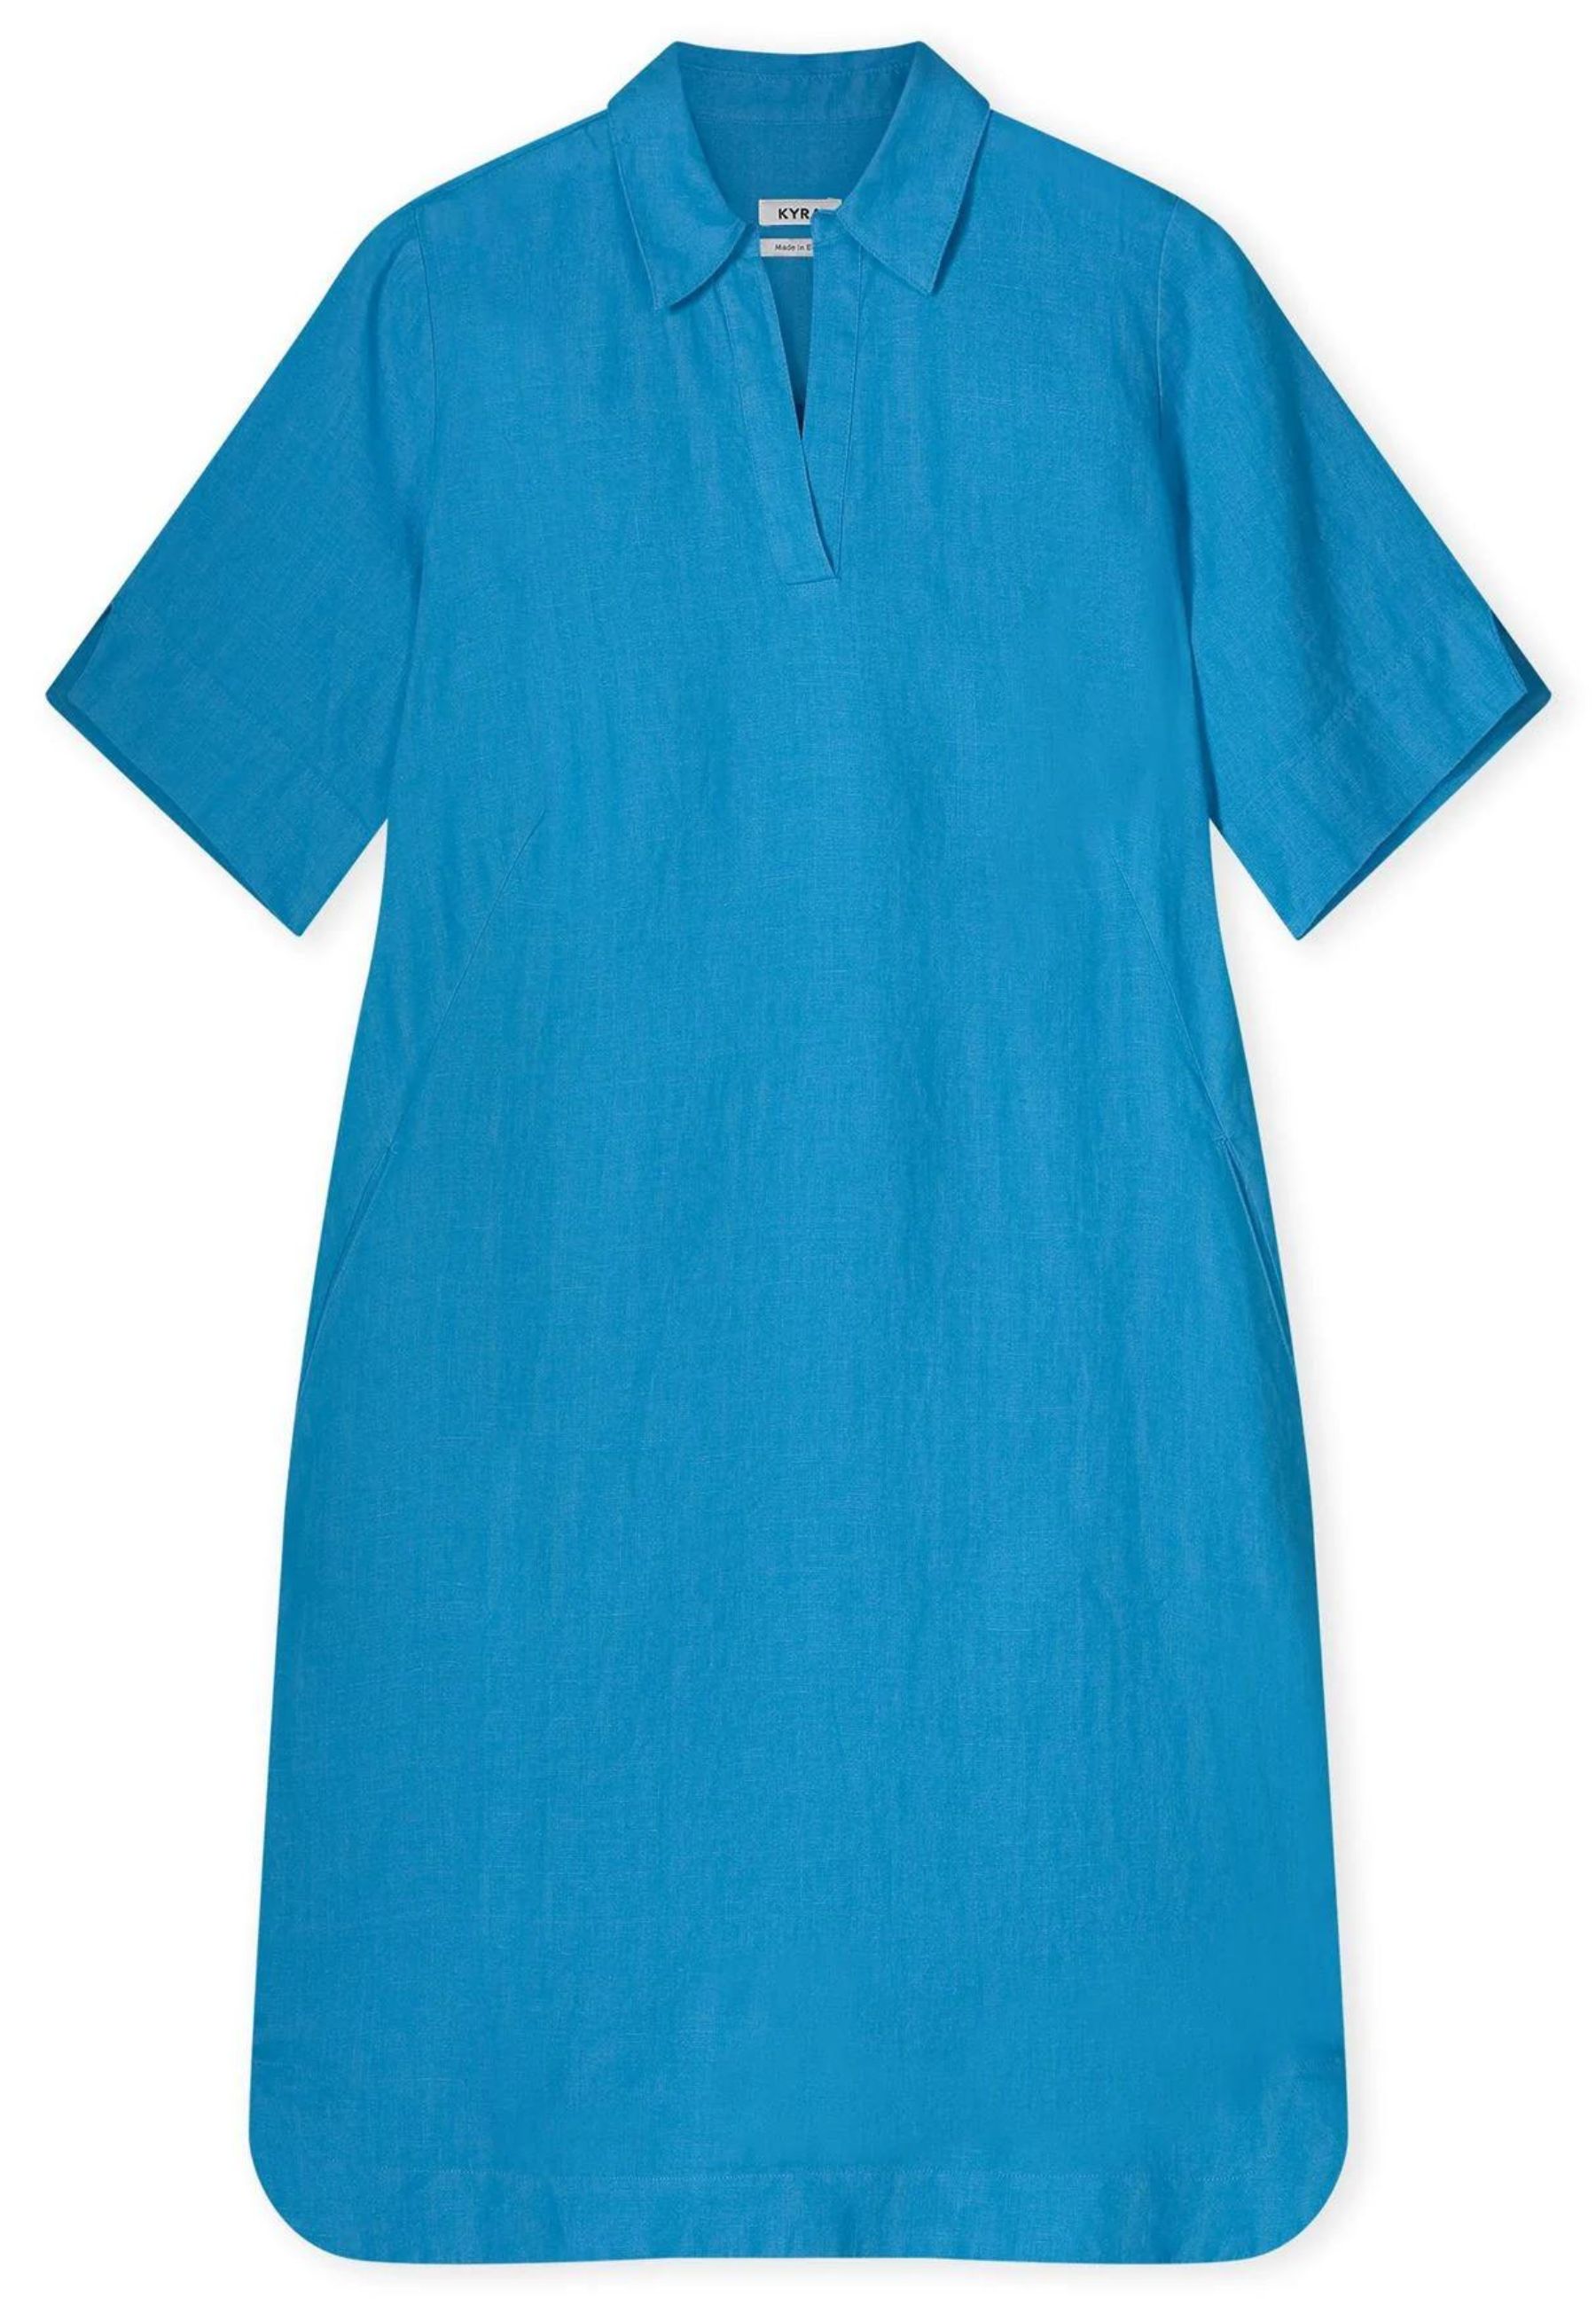 Jurk Blauw Laura blouse jurken blauw